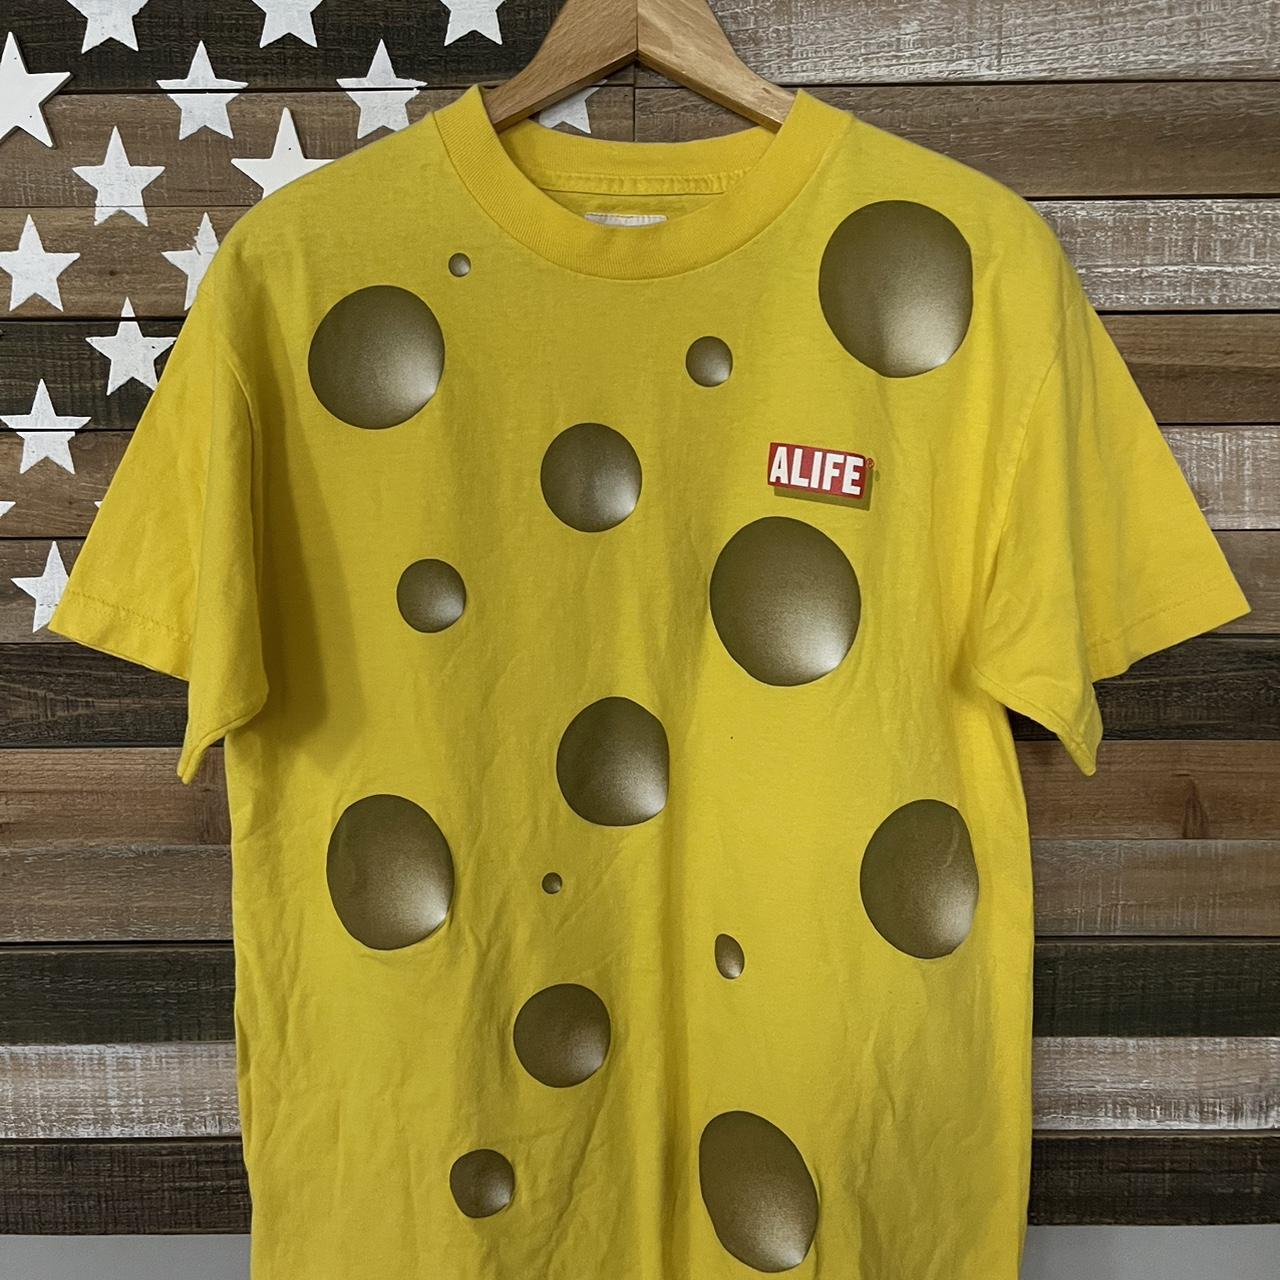 Alife Men's Yellow T-shirt